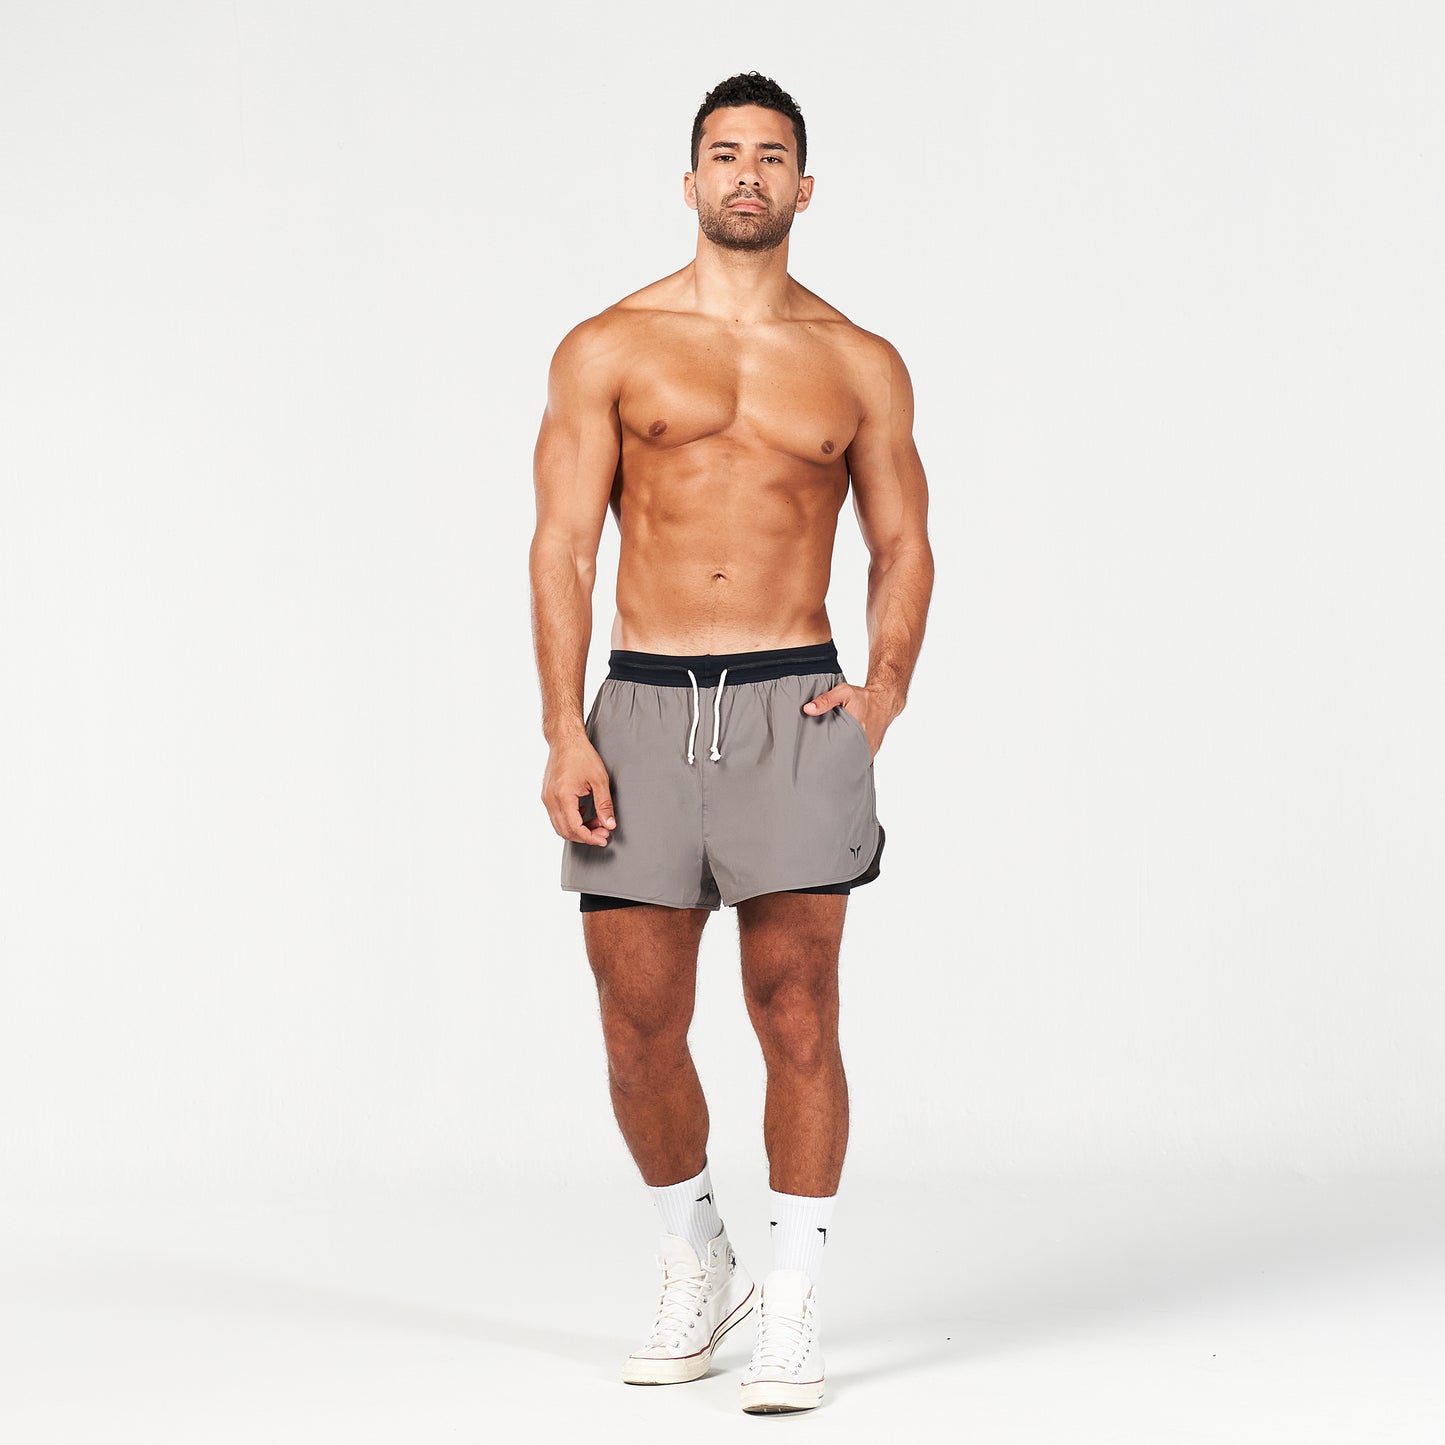 squatwolf-gym-wear-golden-era-young-retro-2-in-1-shorts-dark-gull-grey-workout-short-for-men